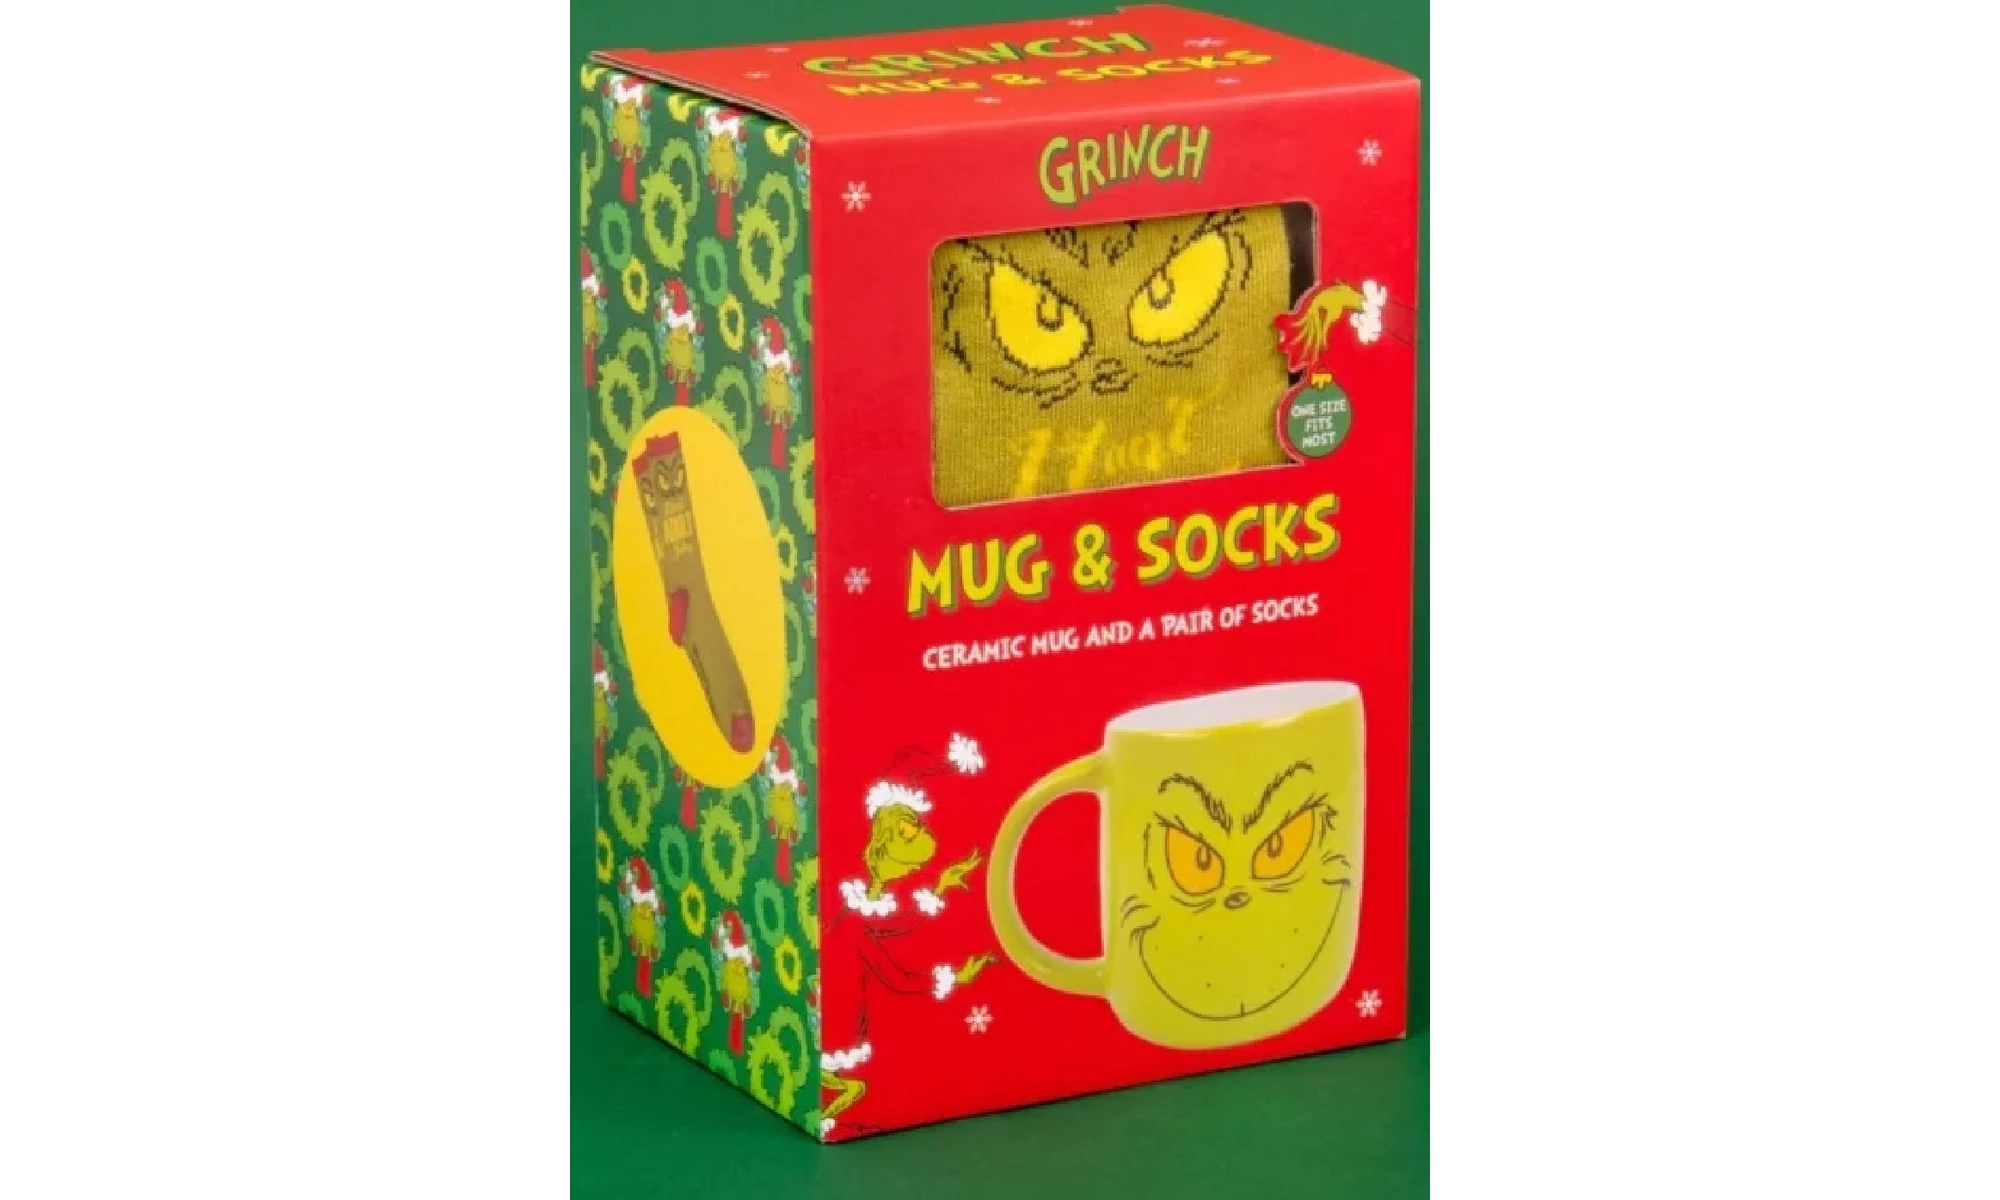 The Grinch Mug & Sock Set